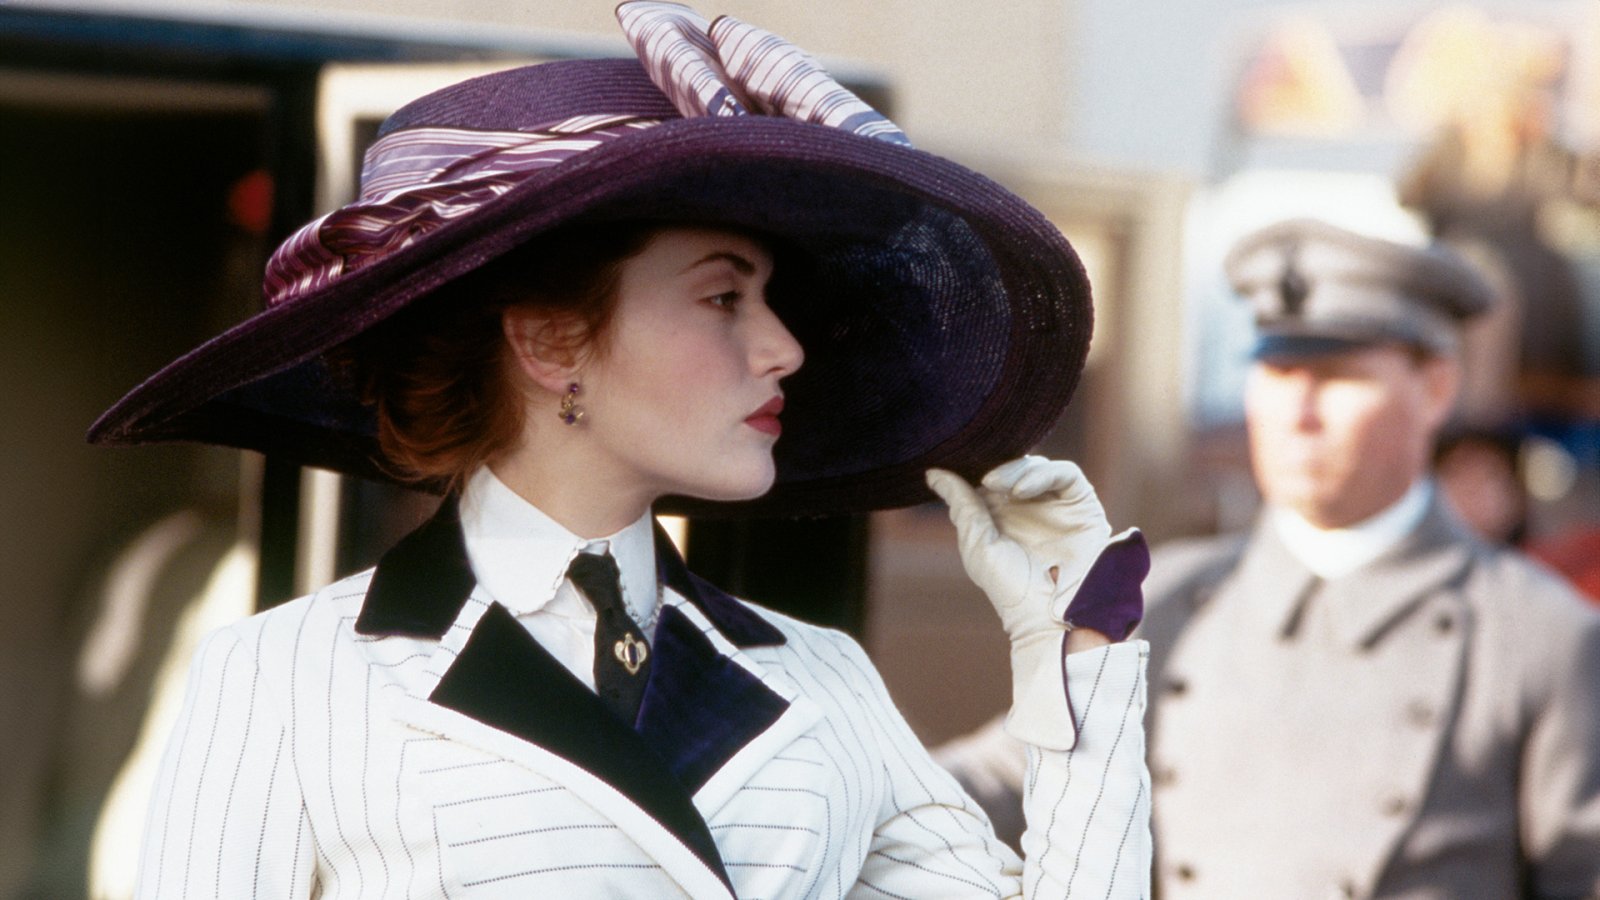 Kate Winslet เปิดอก ชีวิตและชื่อเสียงหลังจาก ‘Titanic’ ไม่น่าพอใจ จนต้องหันไปเล่นหนังฟอร์มเล็กแทน